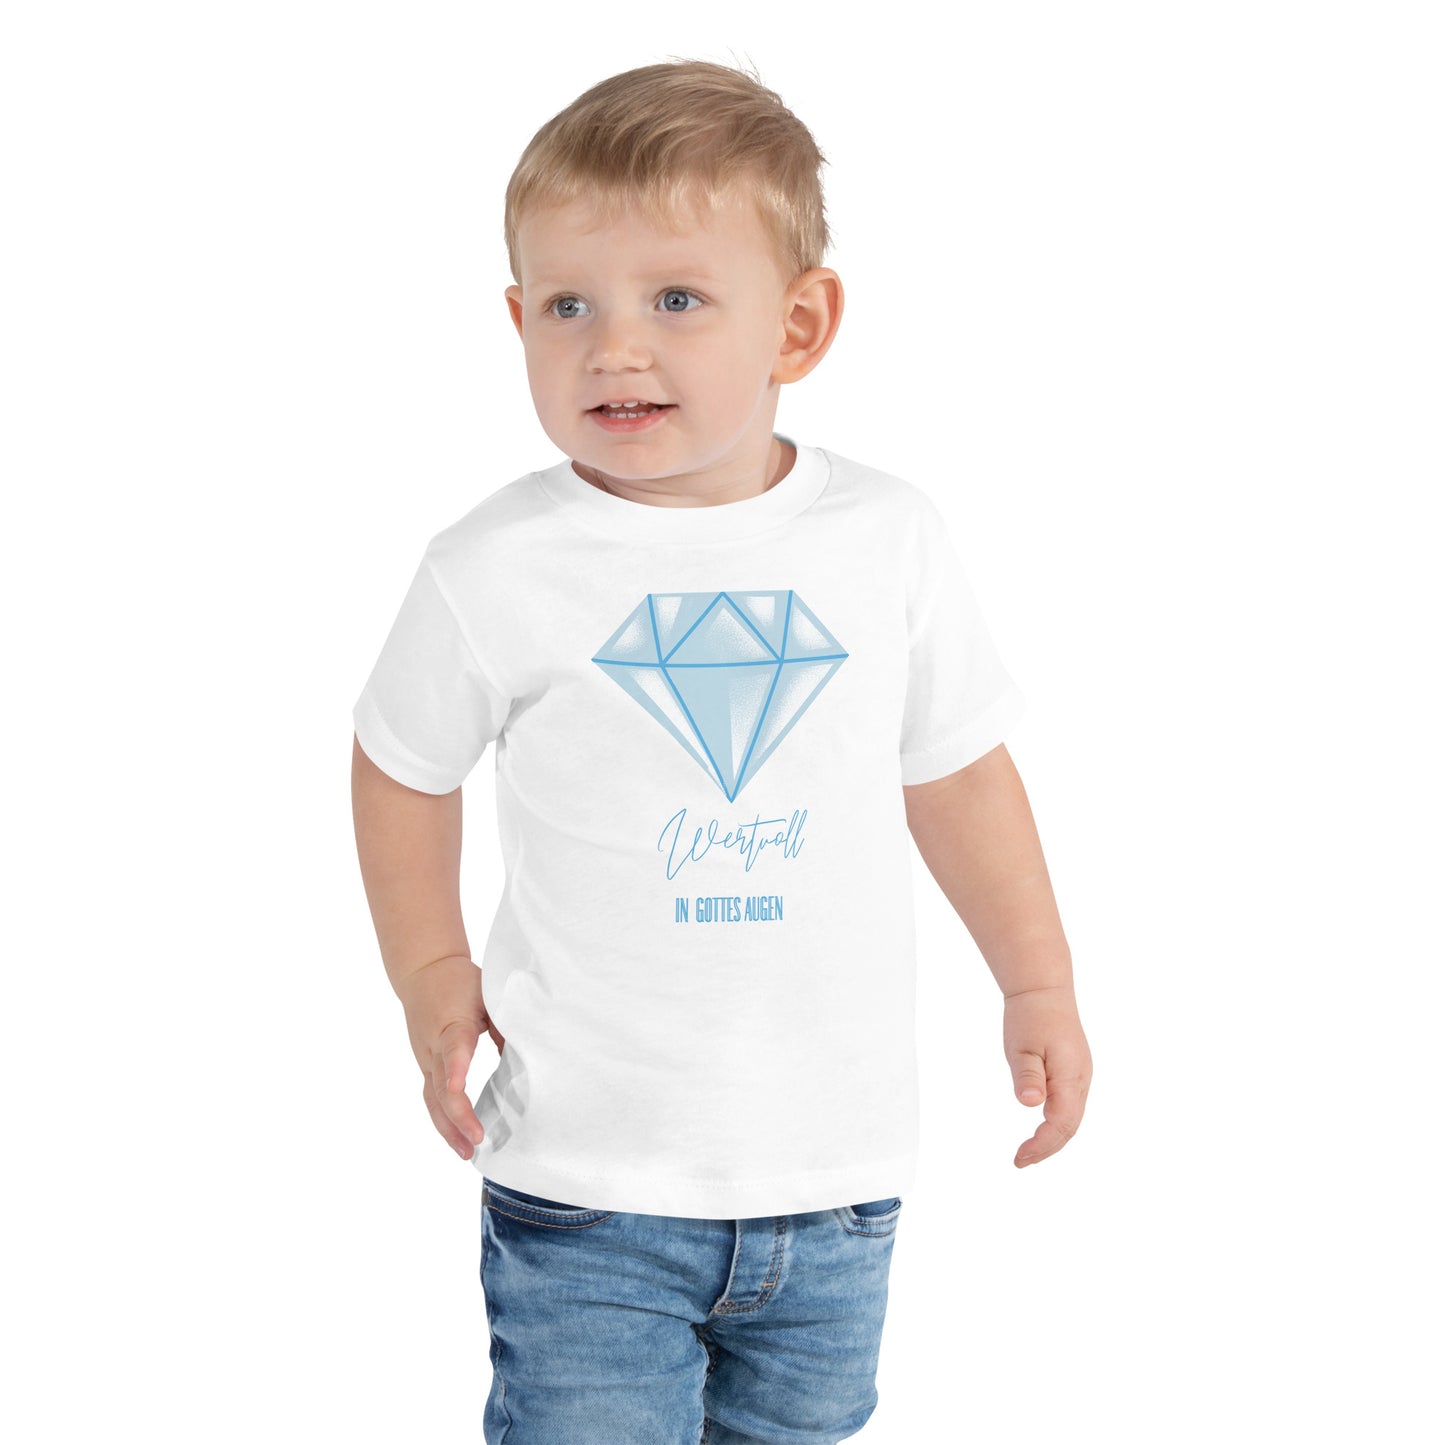 0-A-00 Wertvoll in GOTTES AUGEN-Kurzärmeliges Baby-T-Shirt